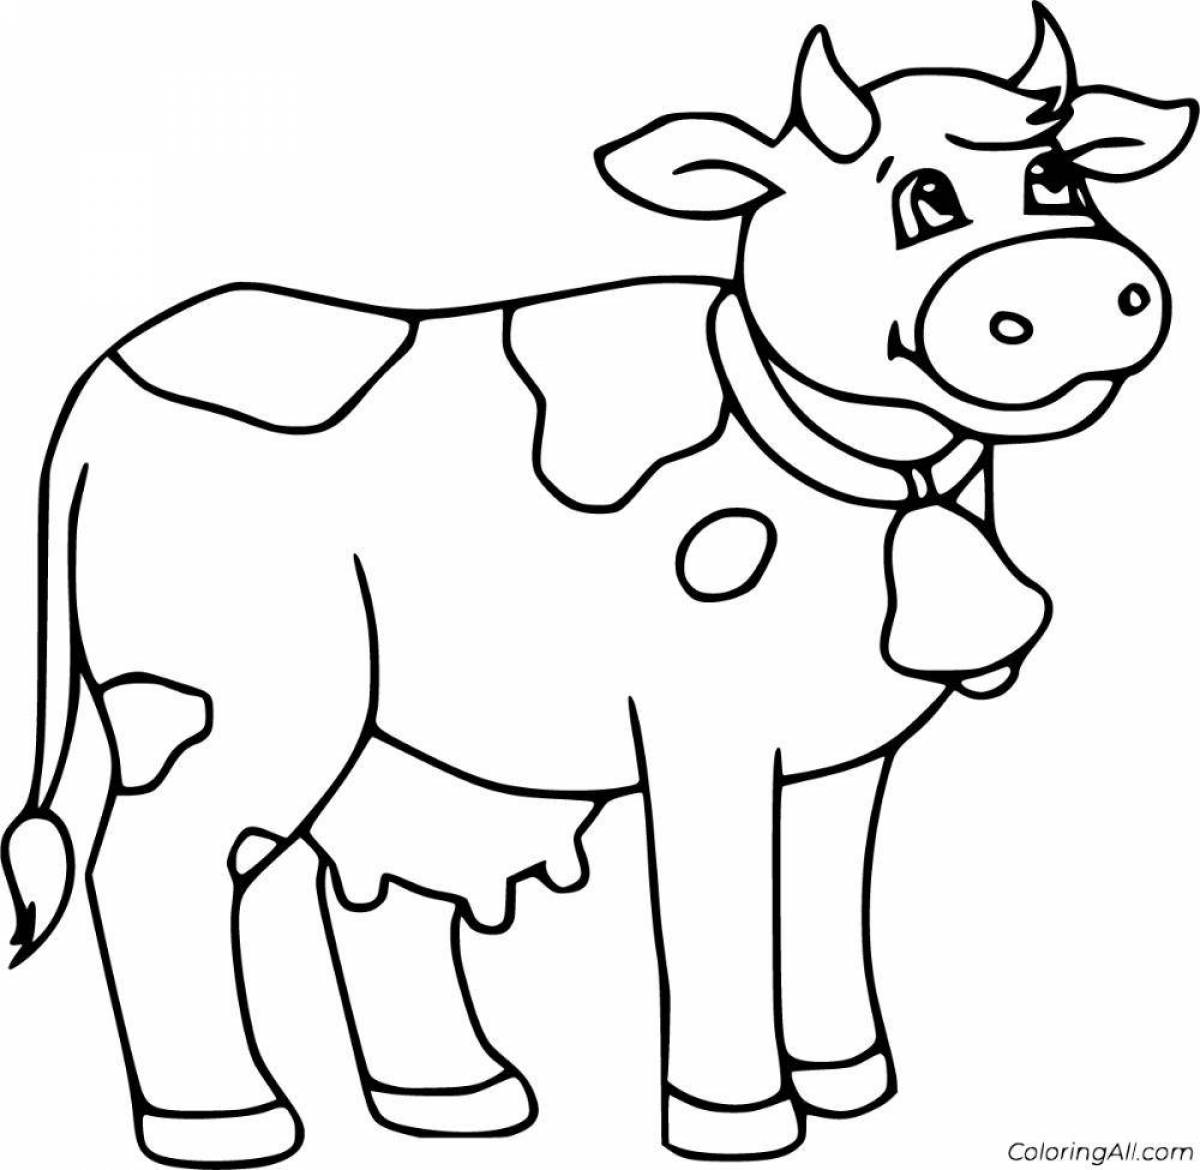 Забавная раскраска коровы для детей